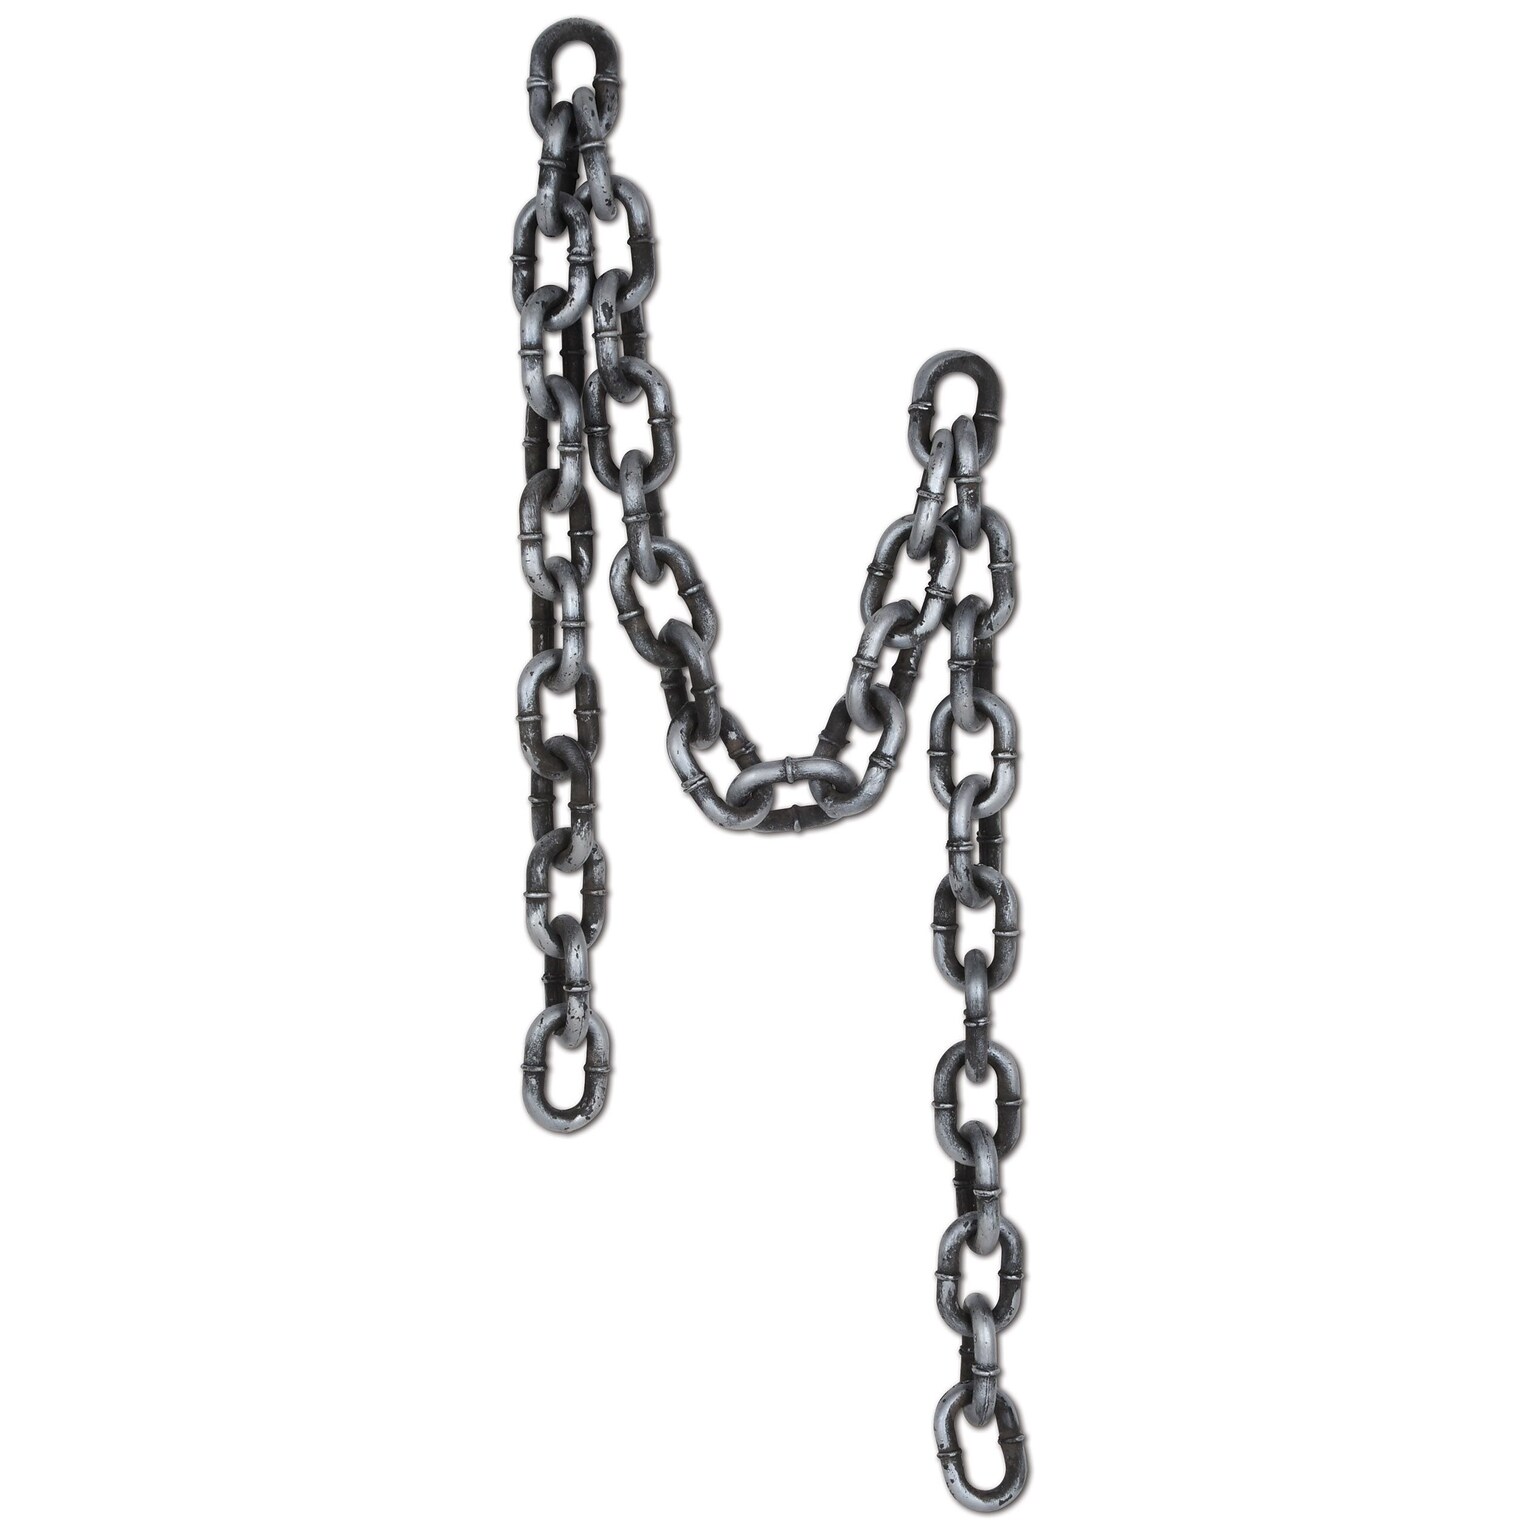 Beistle Plastic Chain, Silver (00043)